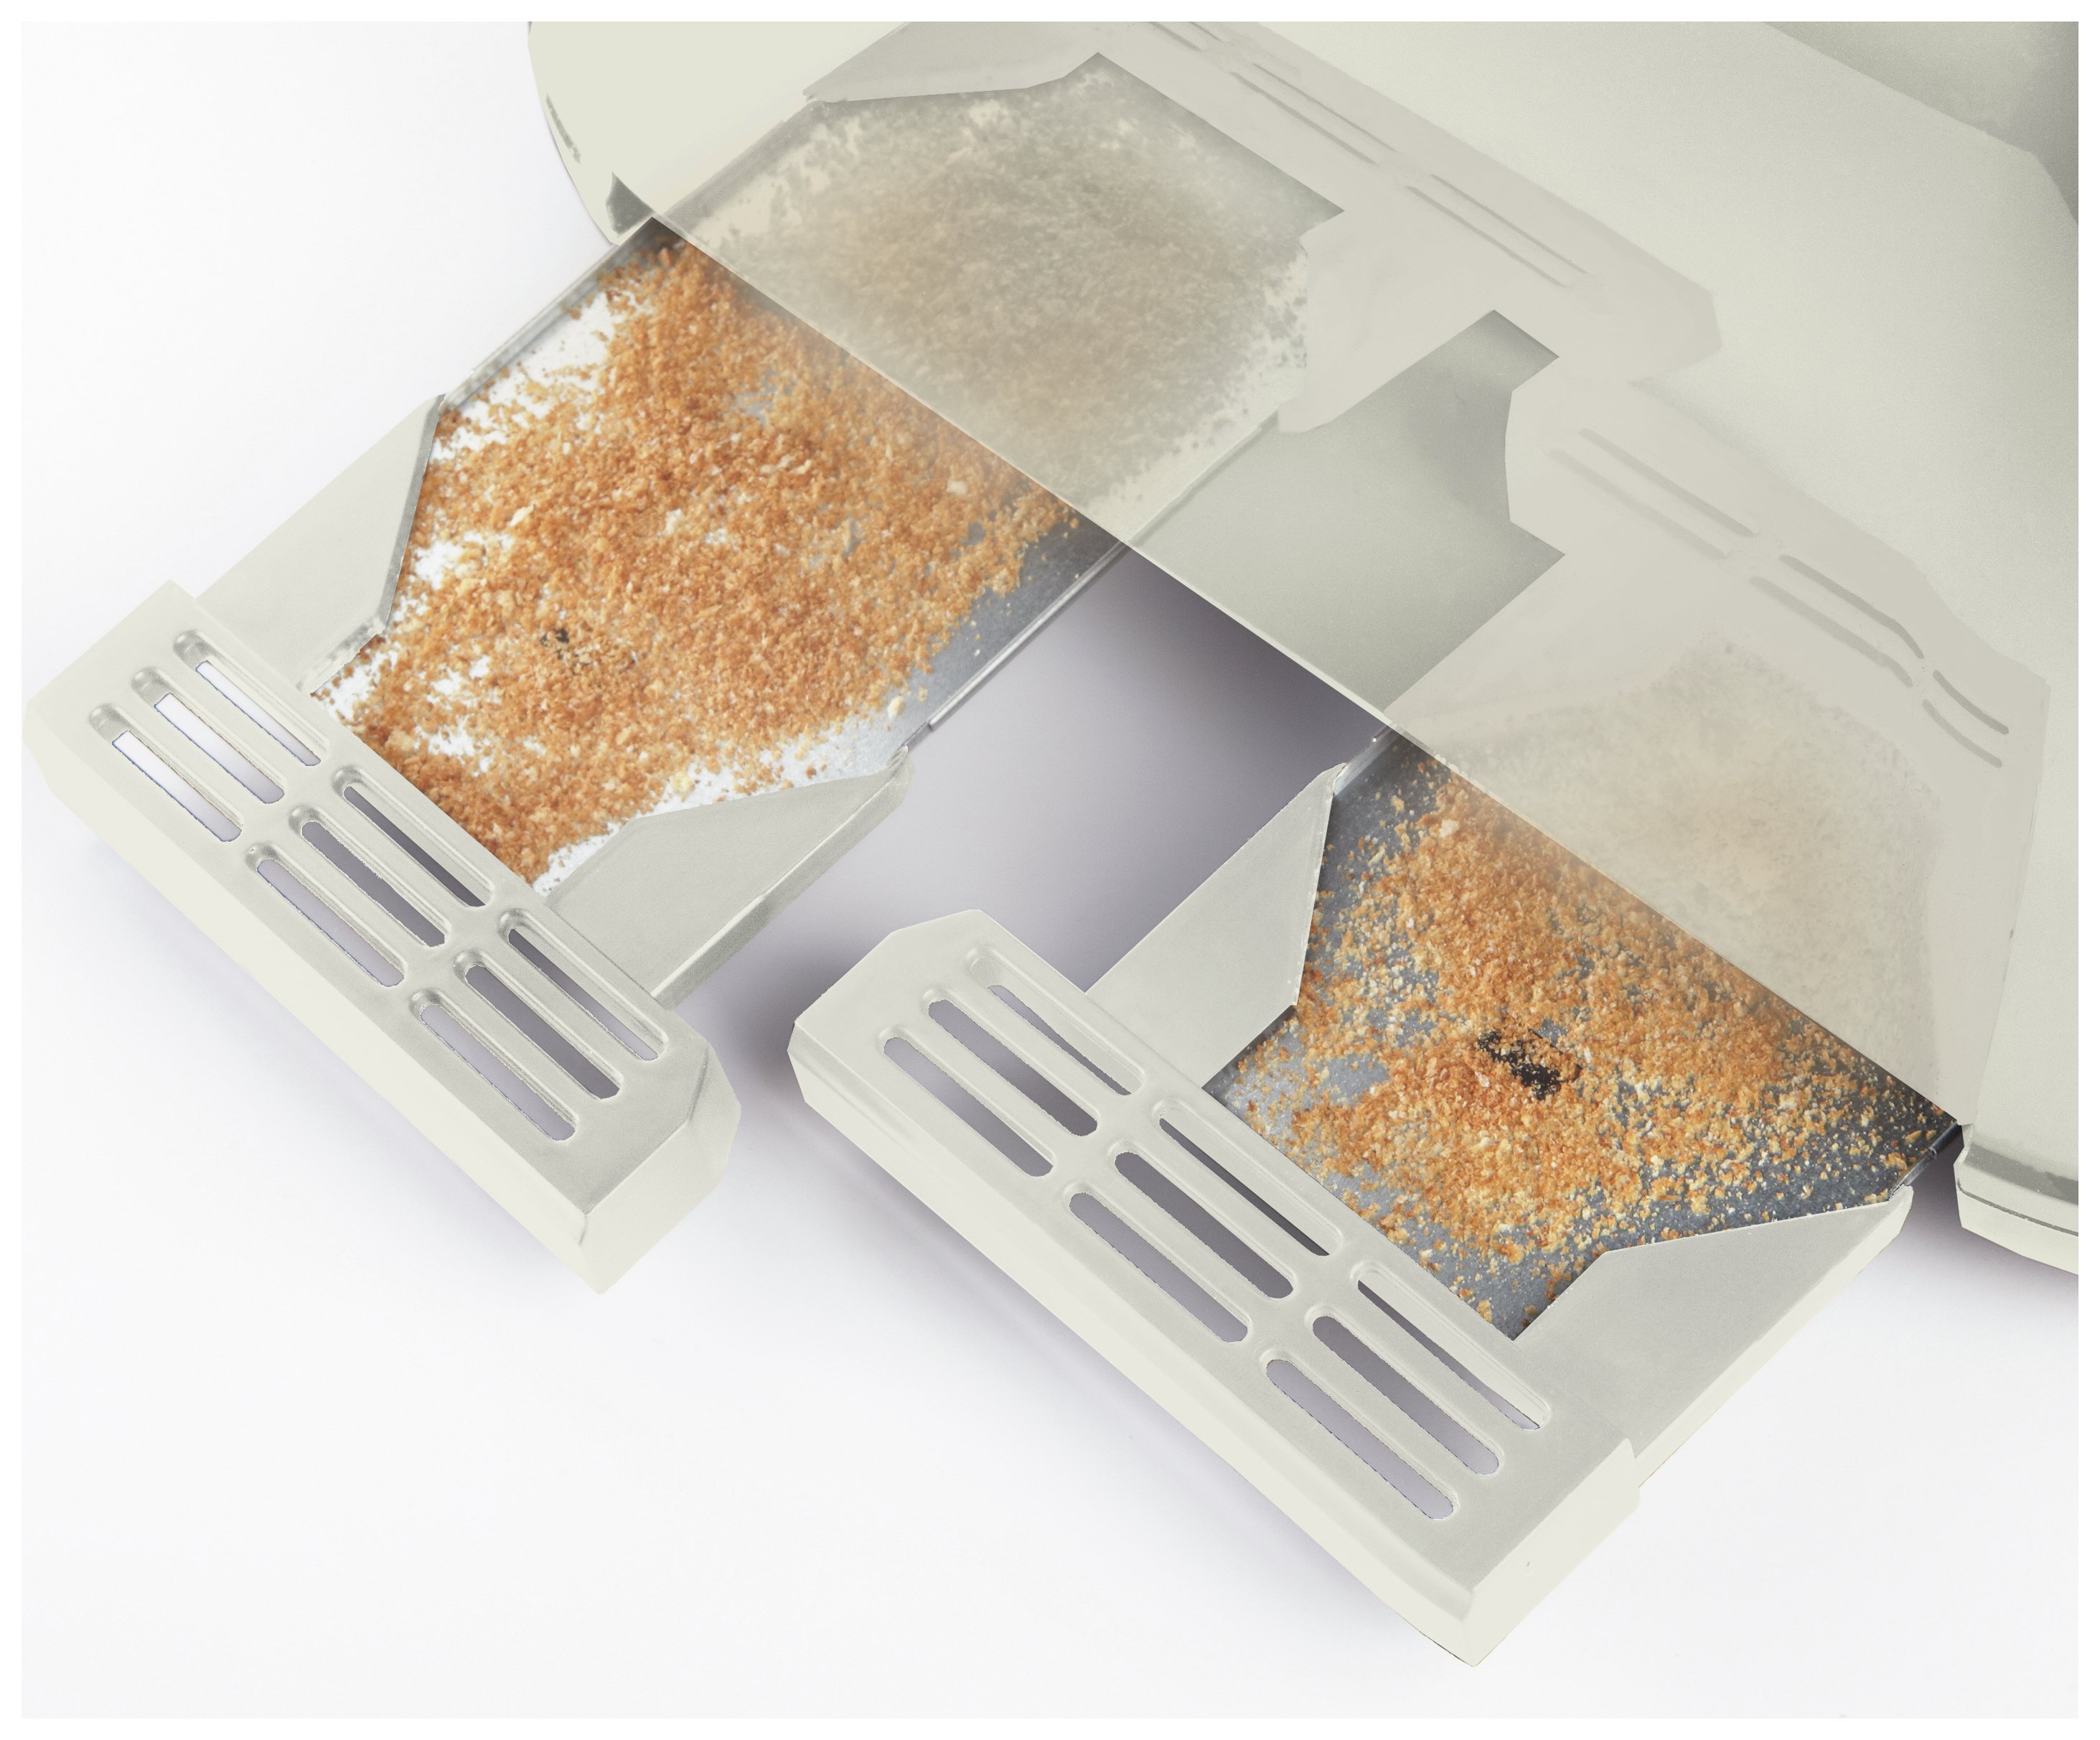 Breville VTT702 Impressions 4 Slice Toaster Review